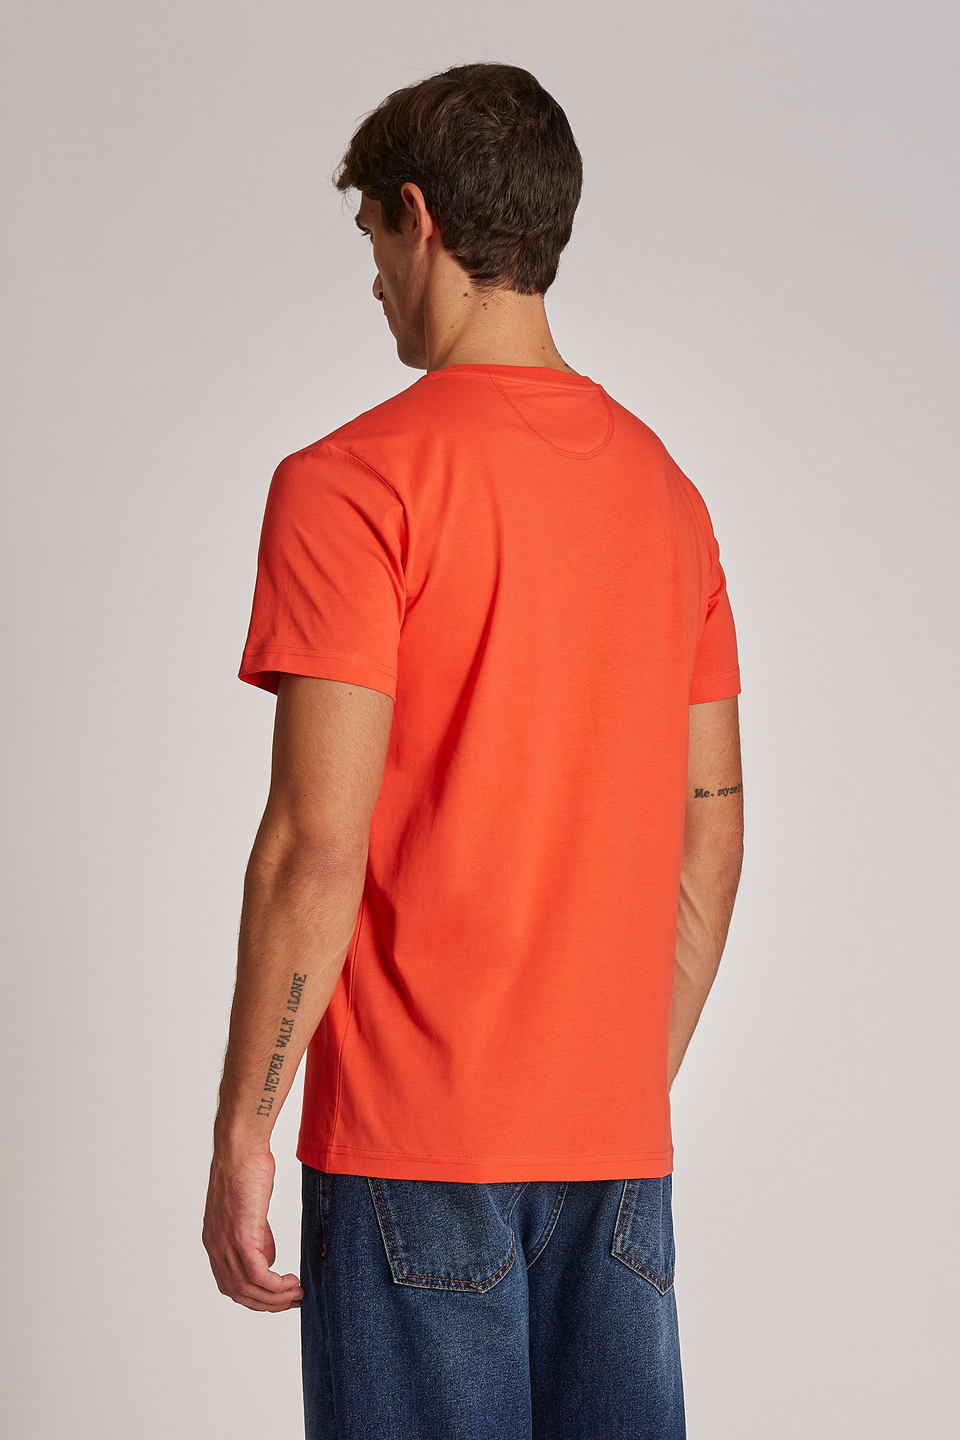 T-shirt da uomo a maniche corte in cotone regular fit | La Martina - Official Online Shop